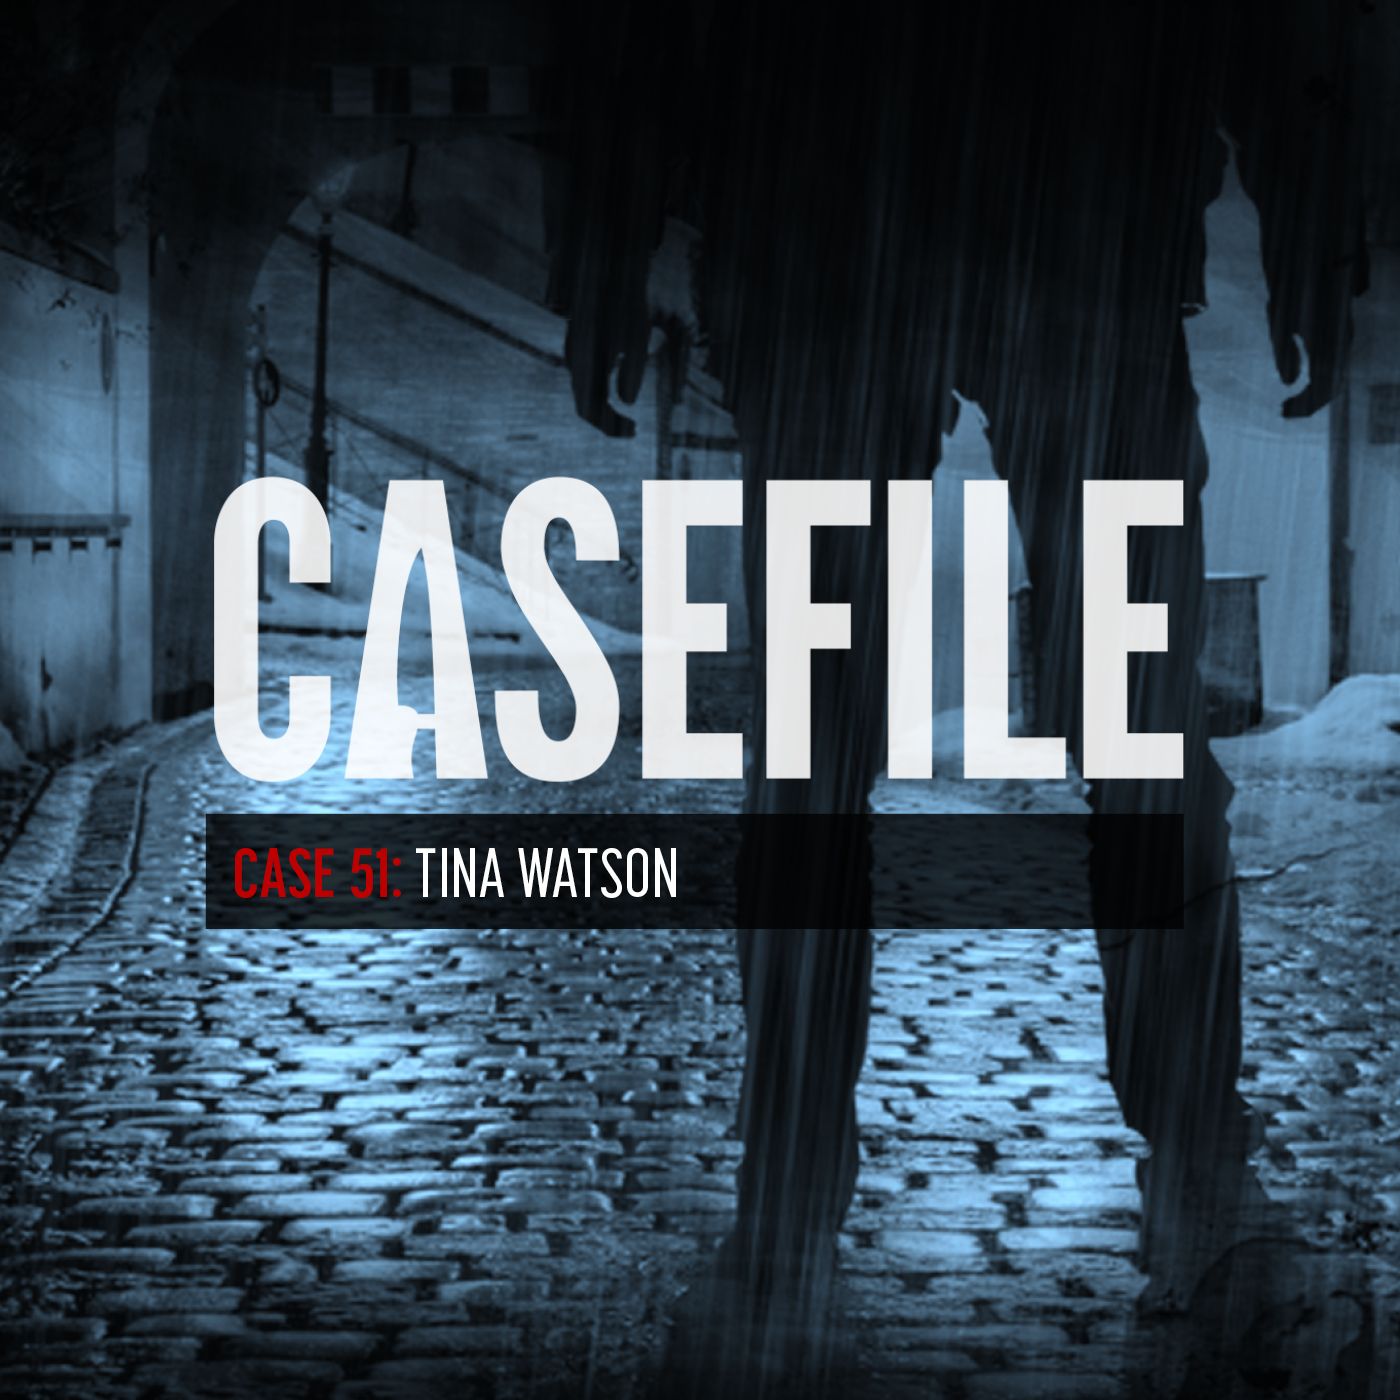 Case 51: Tina Watson